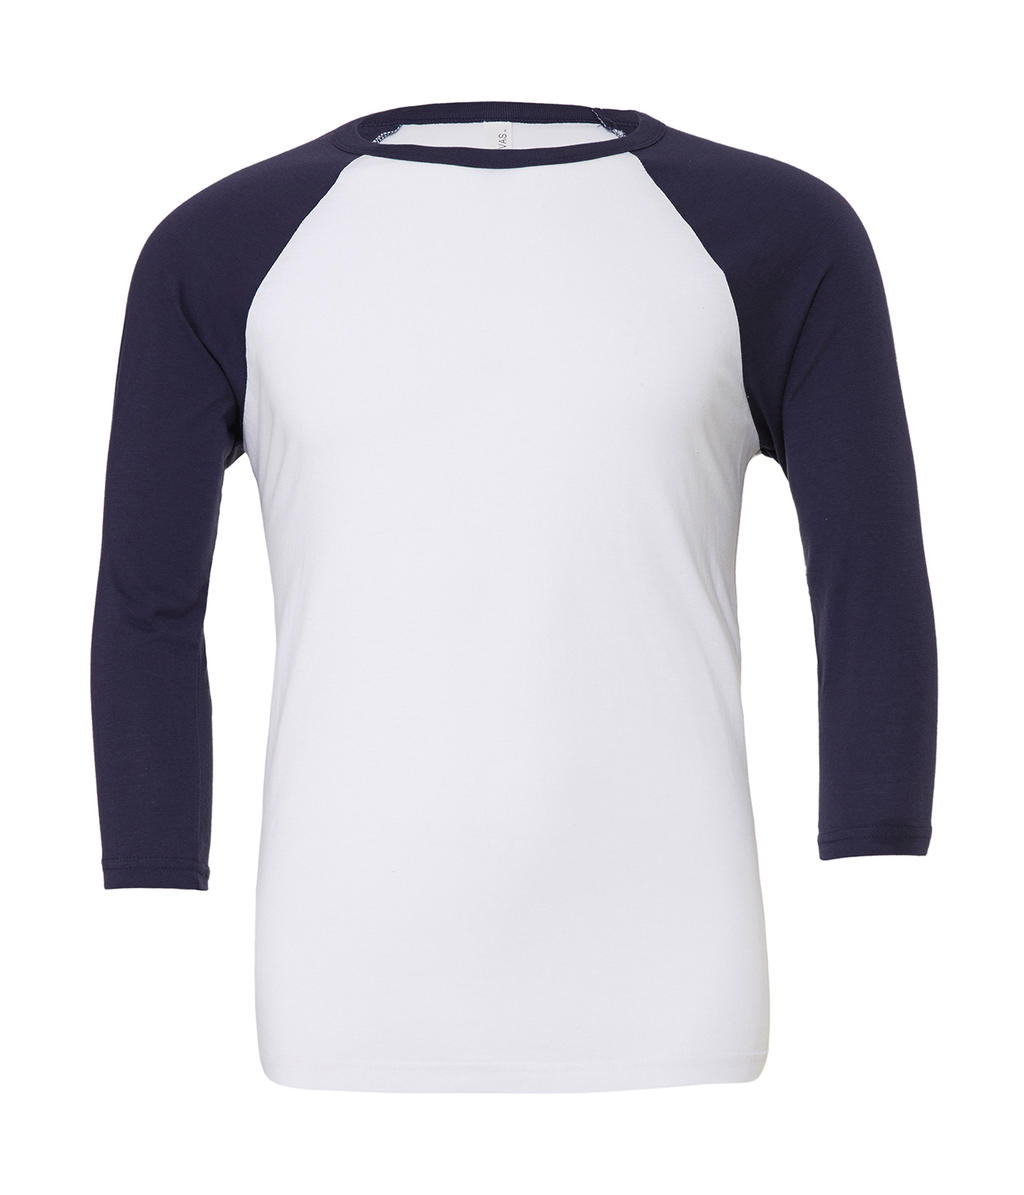 Unisex 3/4 Sleeve Baseball T-Shirt